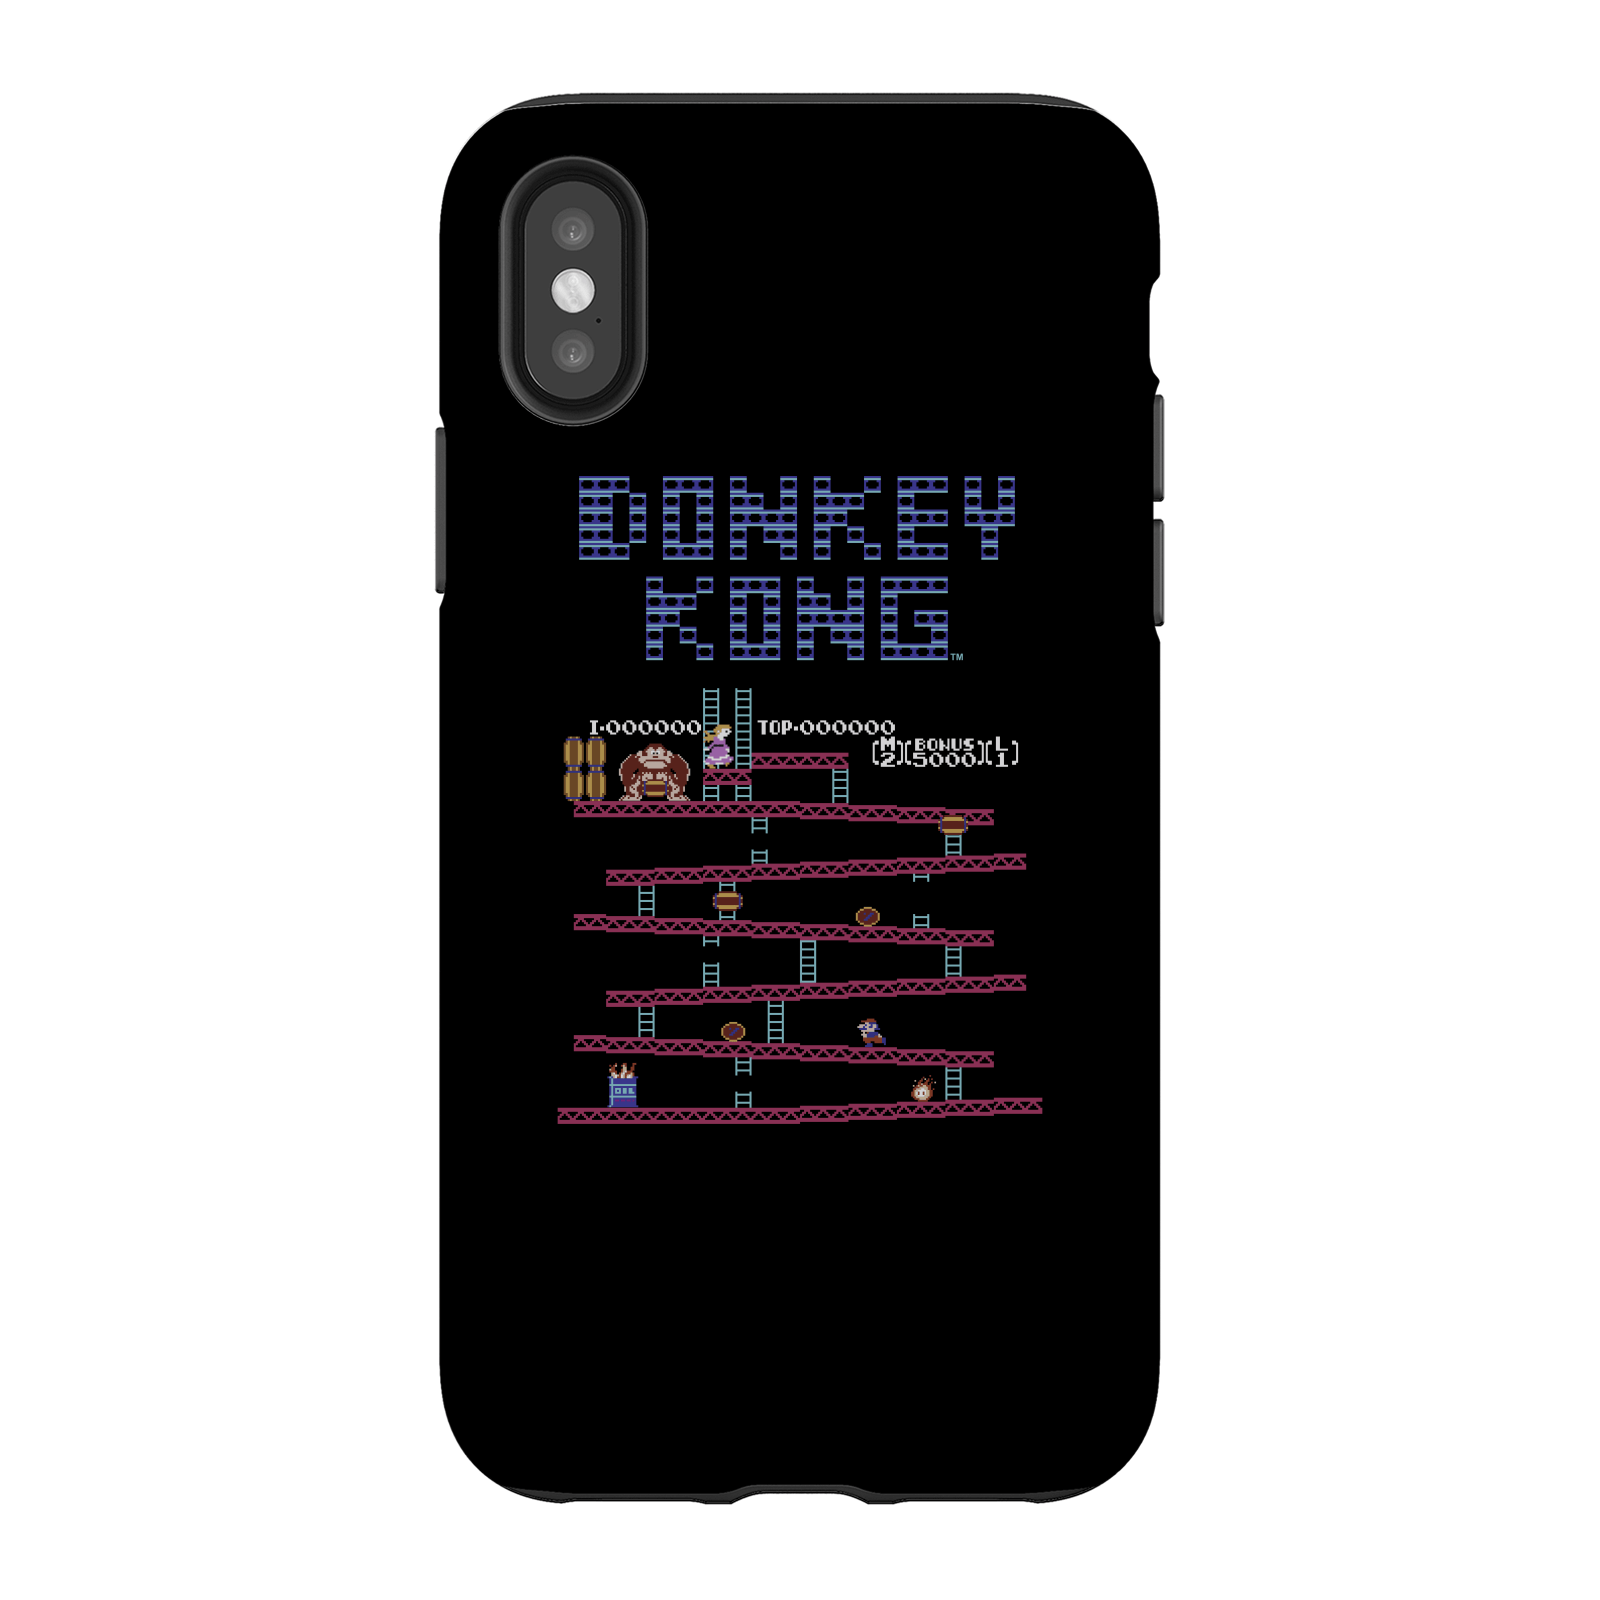 Nintendo Donkey Kong Retro Phone Case - iPhone X - Tough Case - Gloss